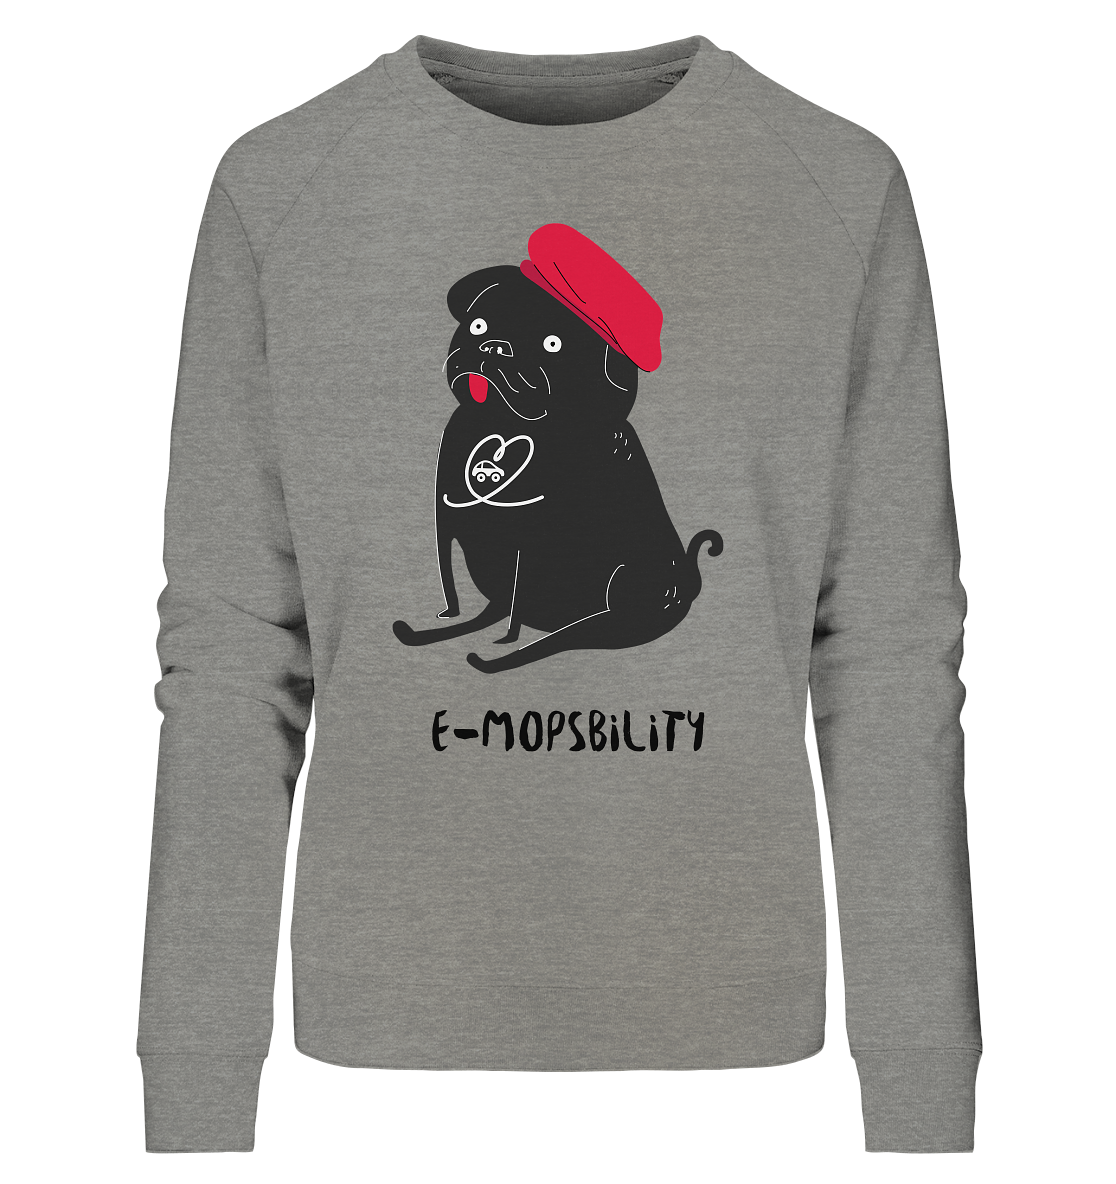 E-Mopsbility ORGANIC - Ladies Organic Sweatshirt